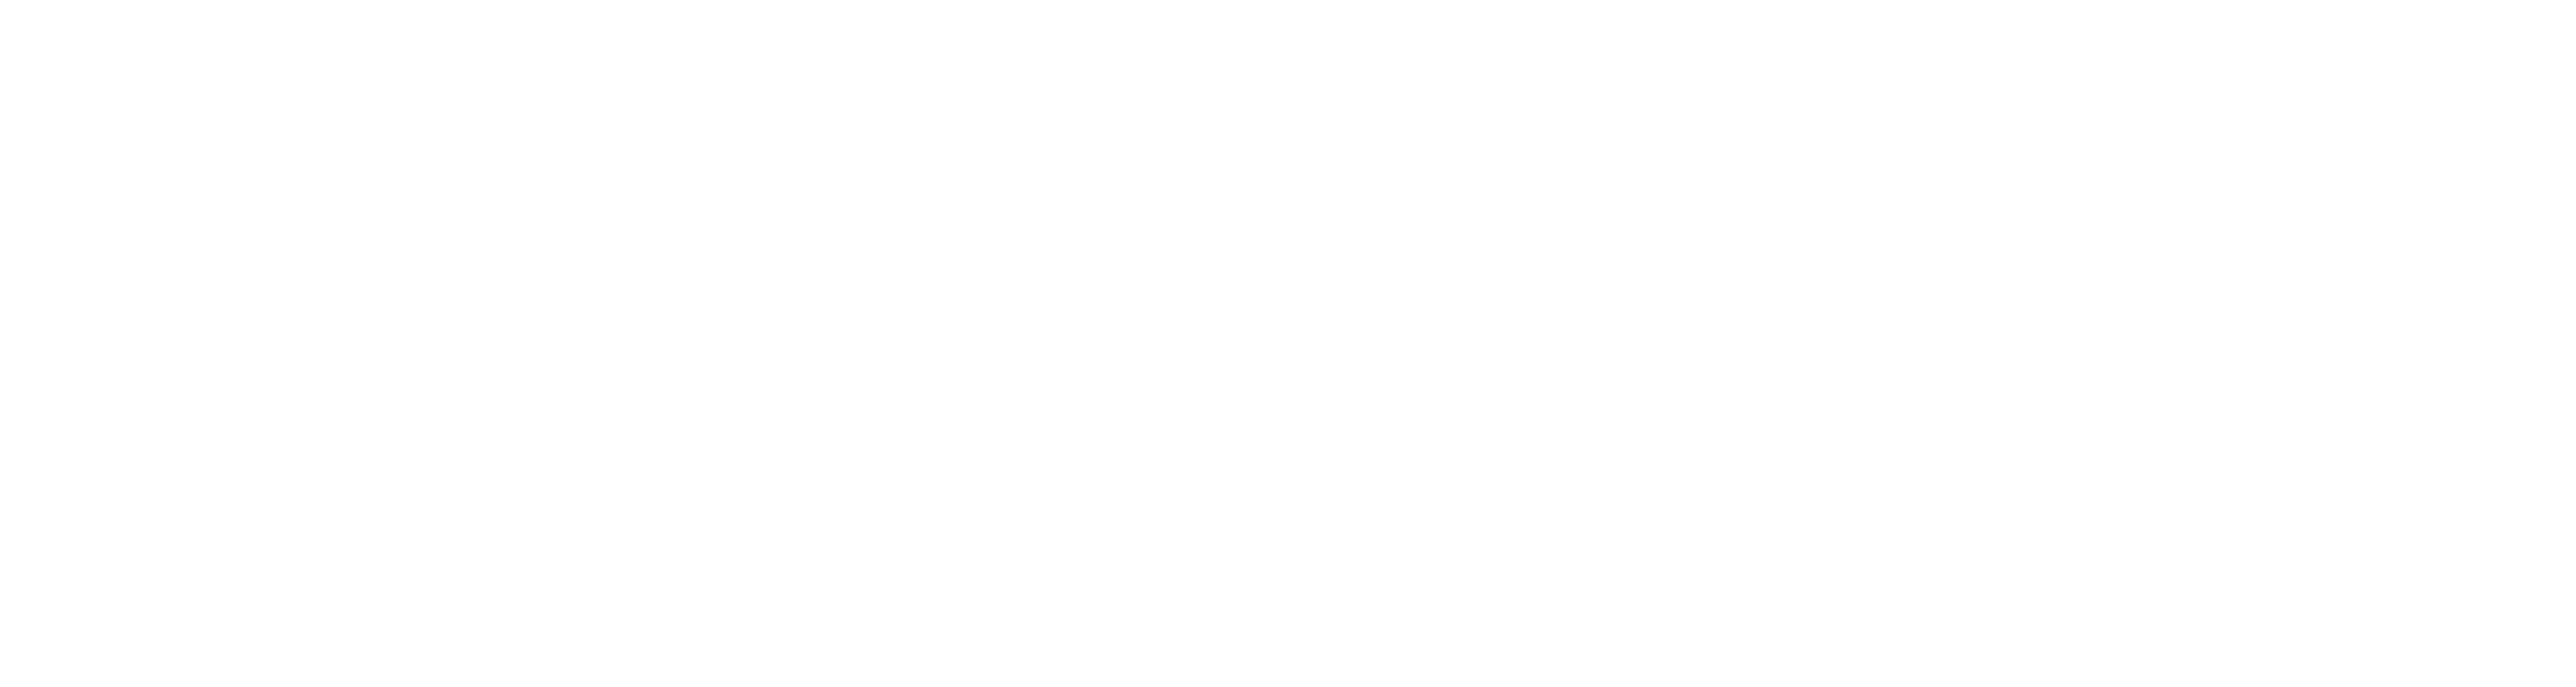 Universitetet i Oslo sin hjemmeside